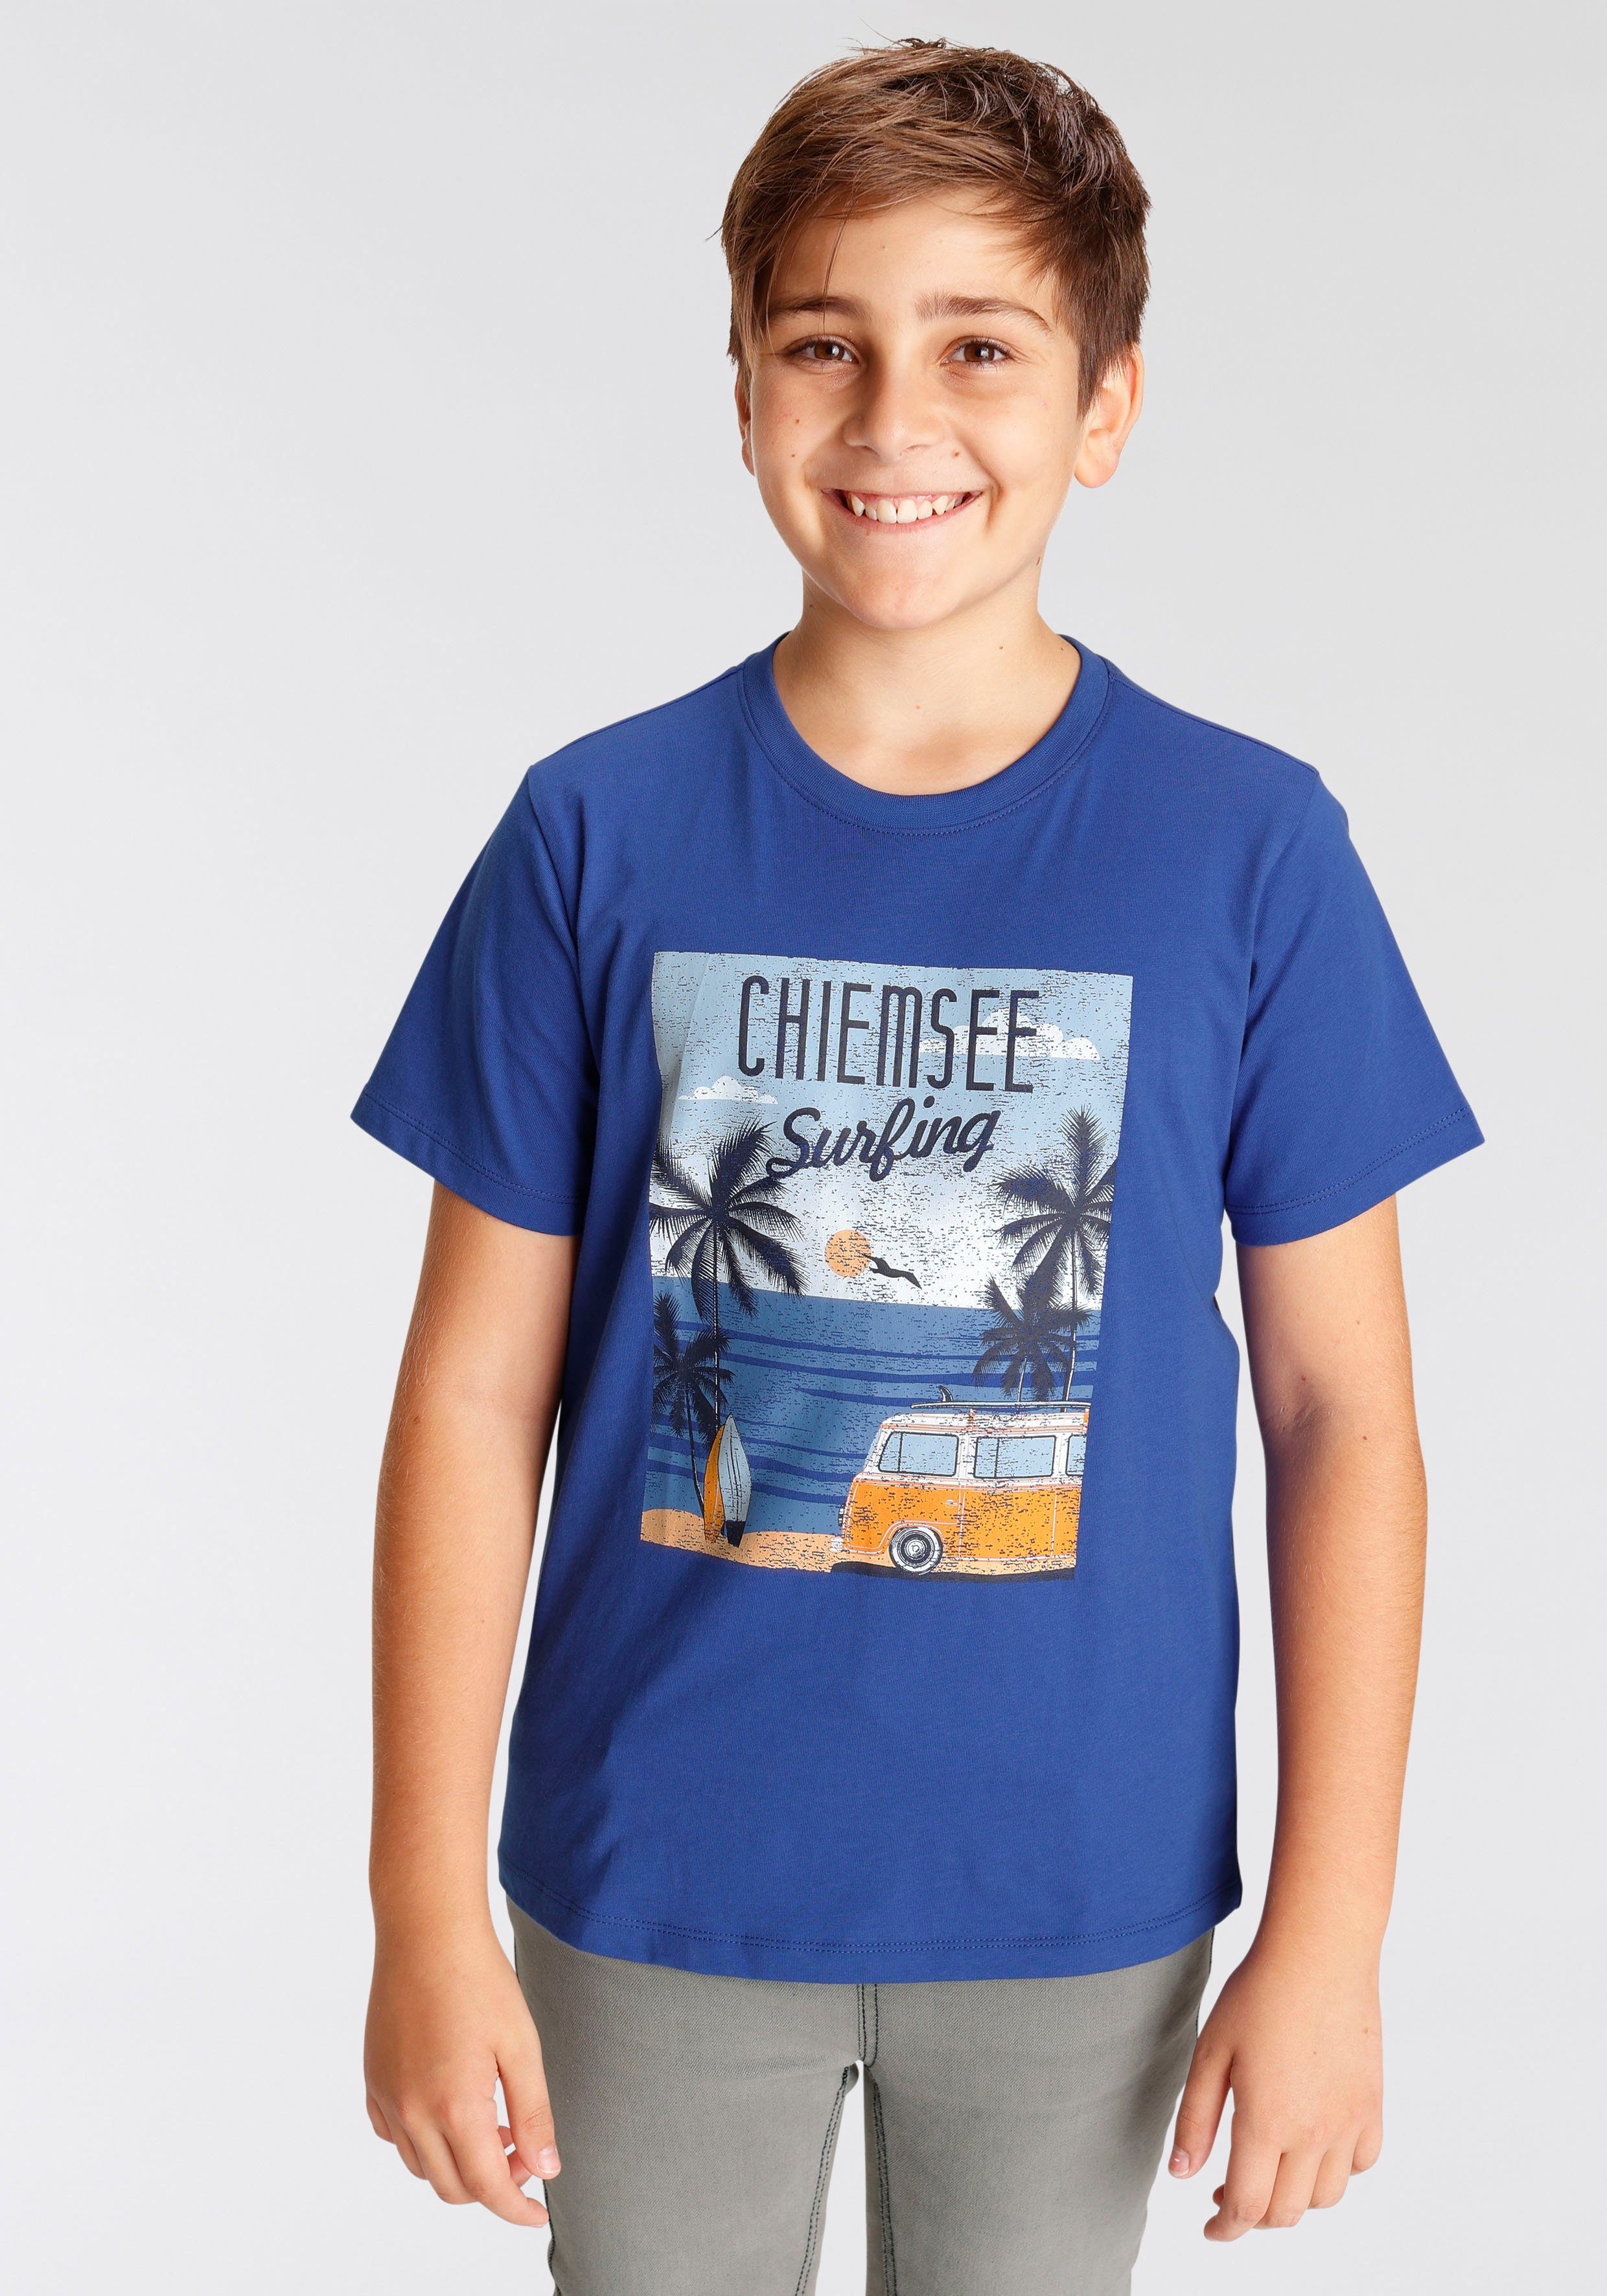 T-Shirt Surfing Chiemsee